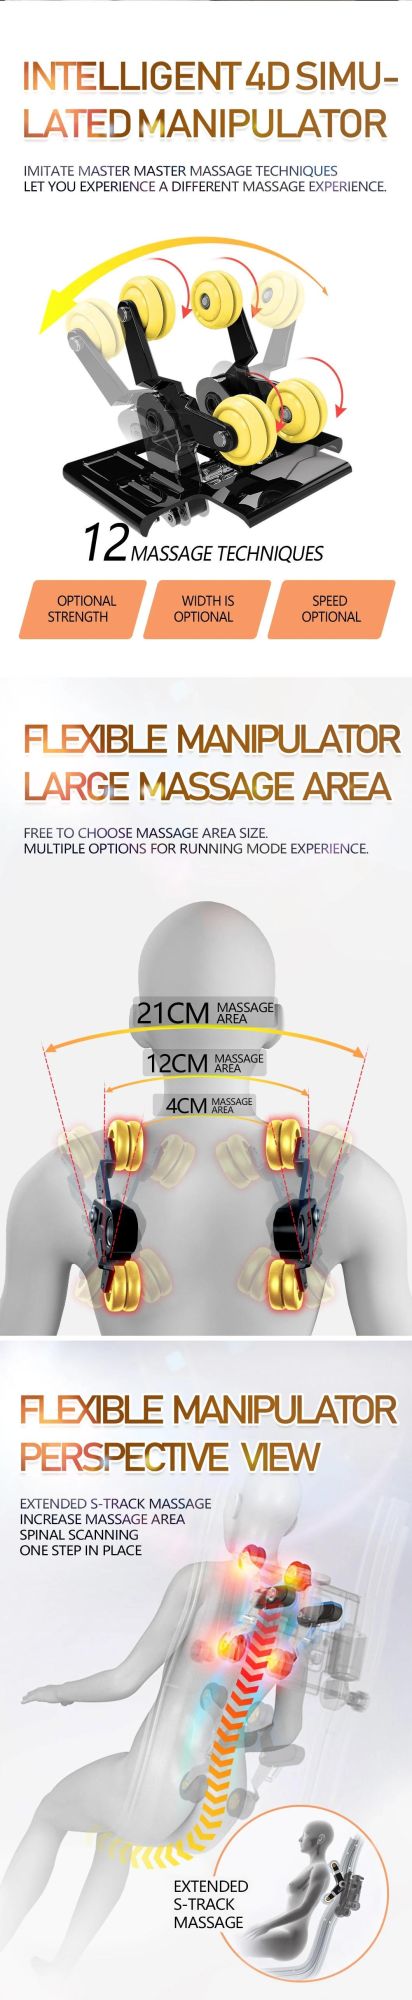 2020 Omeik Advanced Zero Gravity Space Saving SL-Track Full Body Recliner Massage Chair